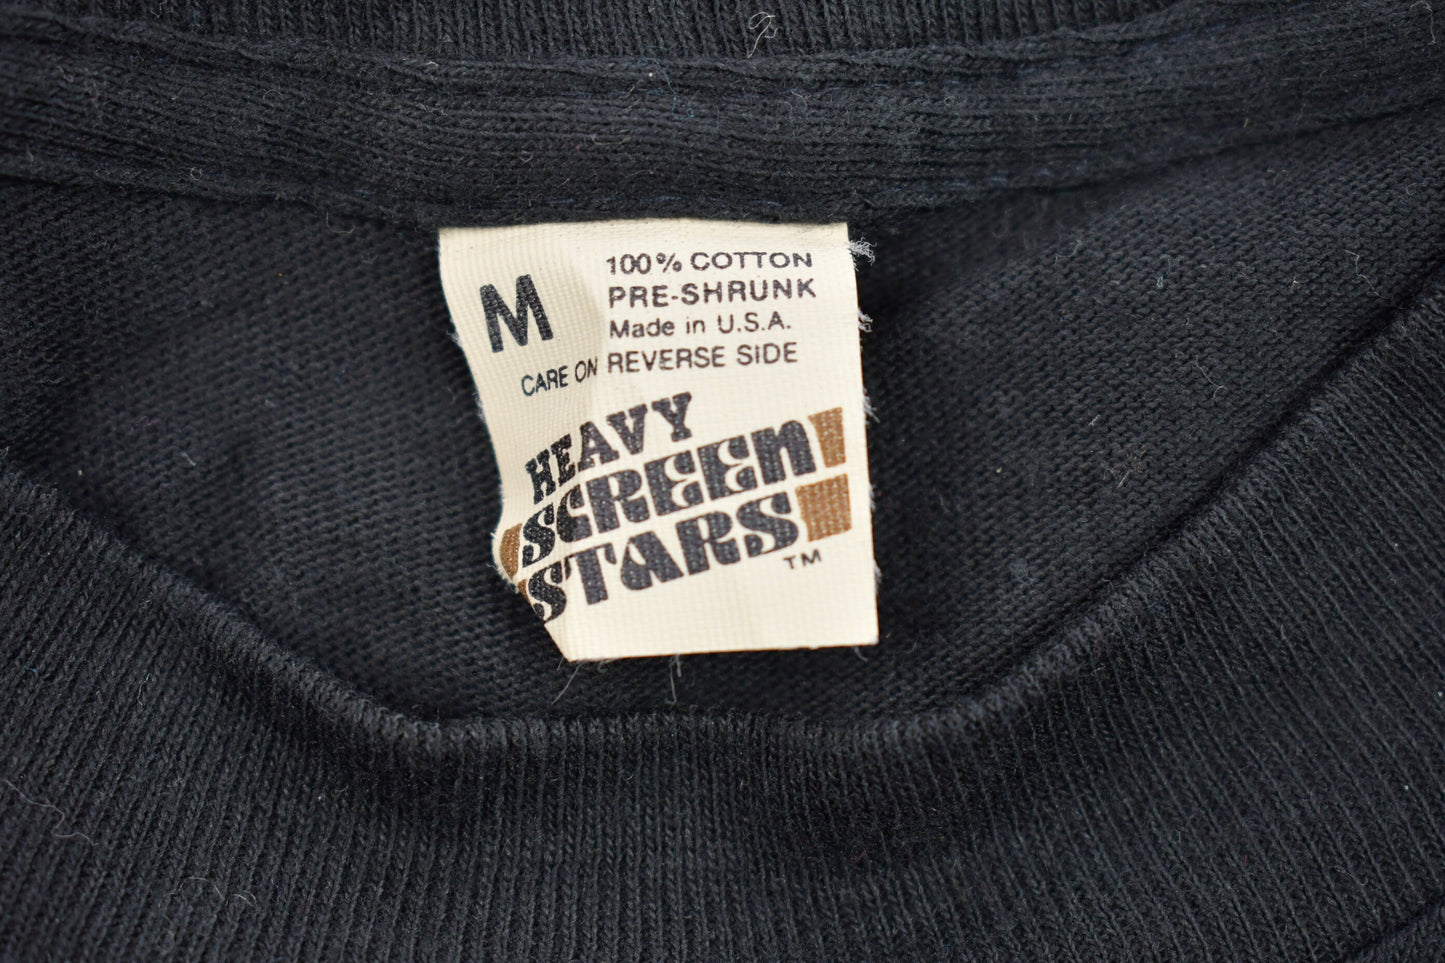 Vintage Michael Jackson Merch T-shirt single stitch